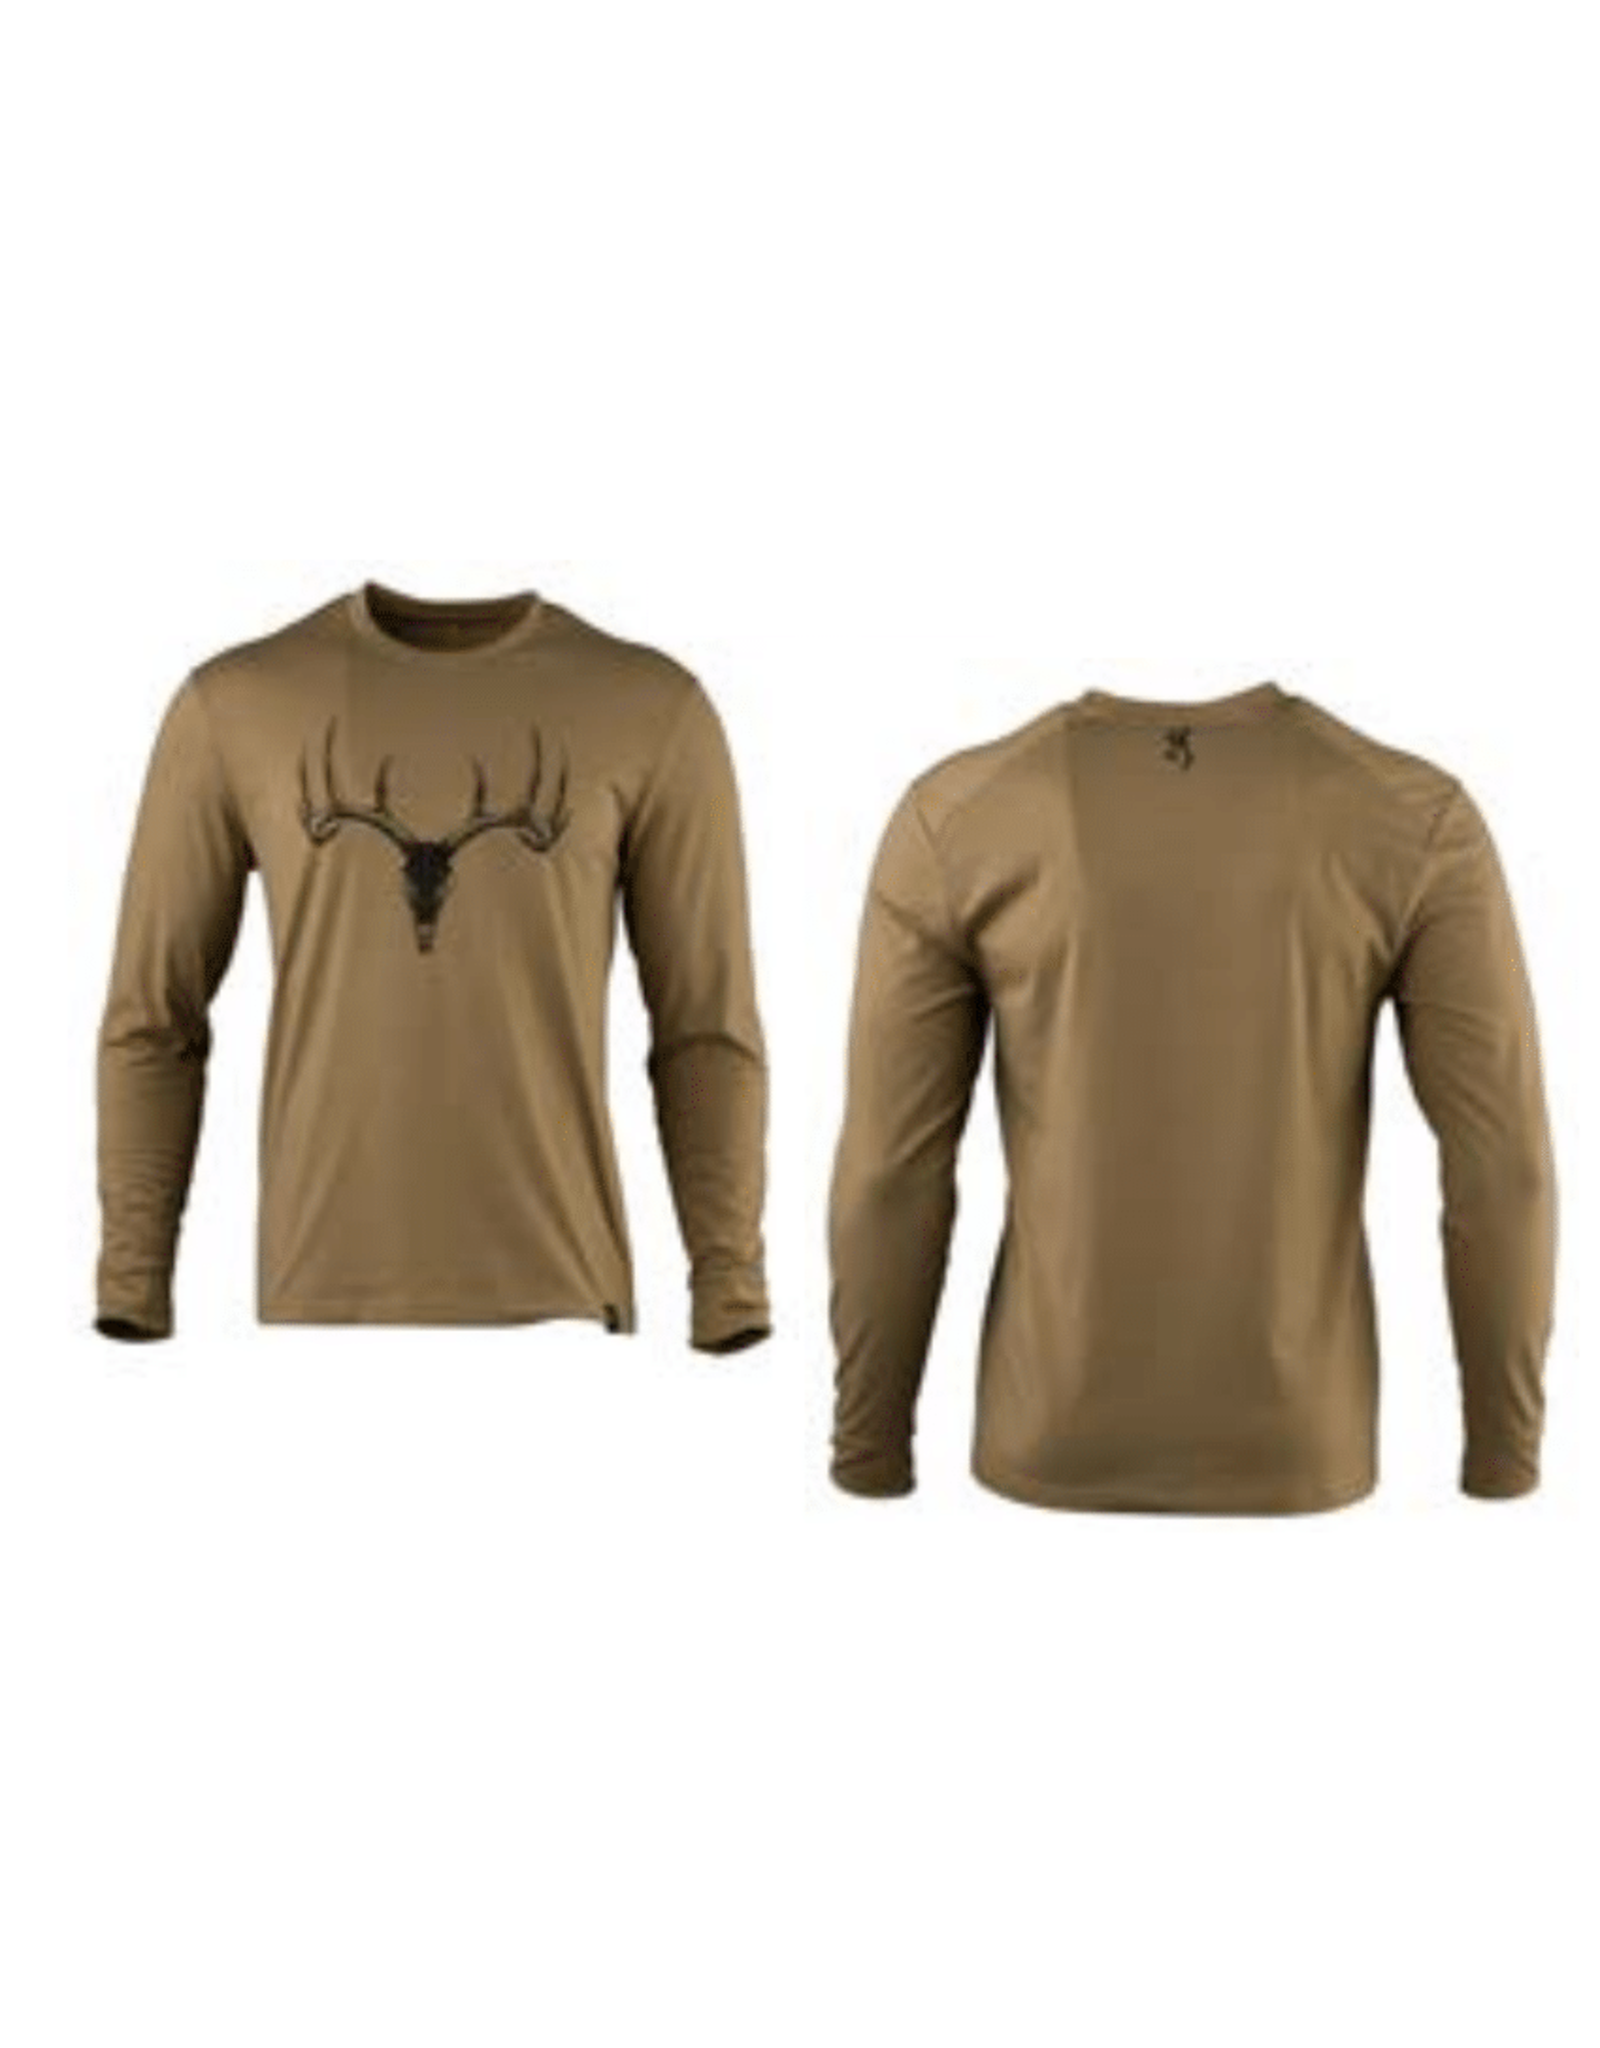 Browning Camp Long Sleeve Shirt - White Tail - Tan - X-Large